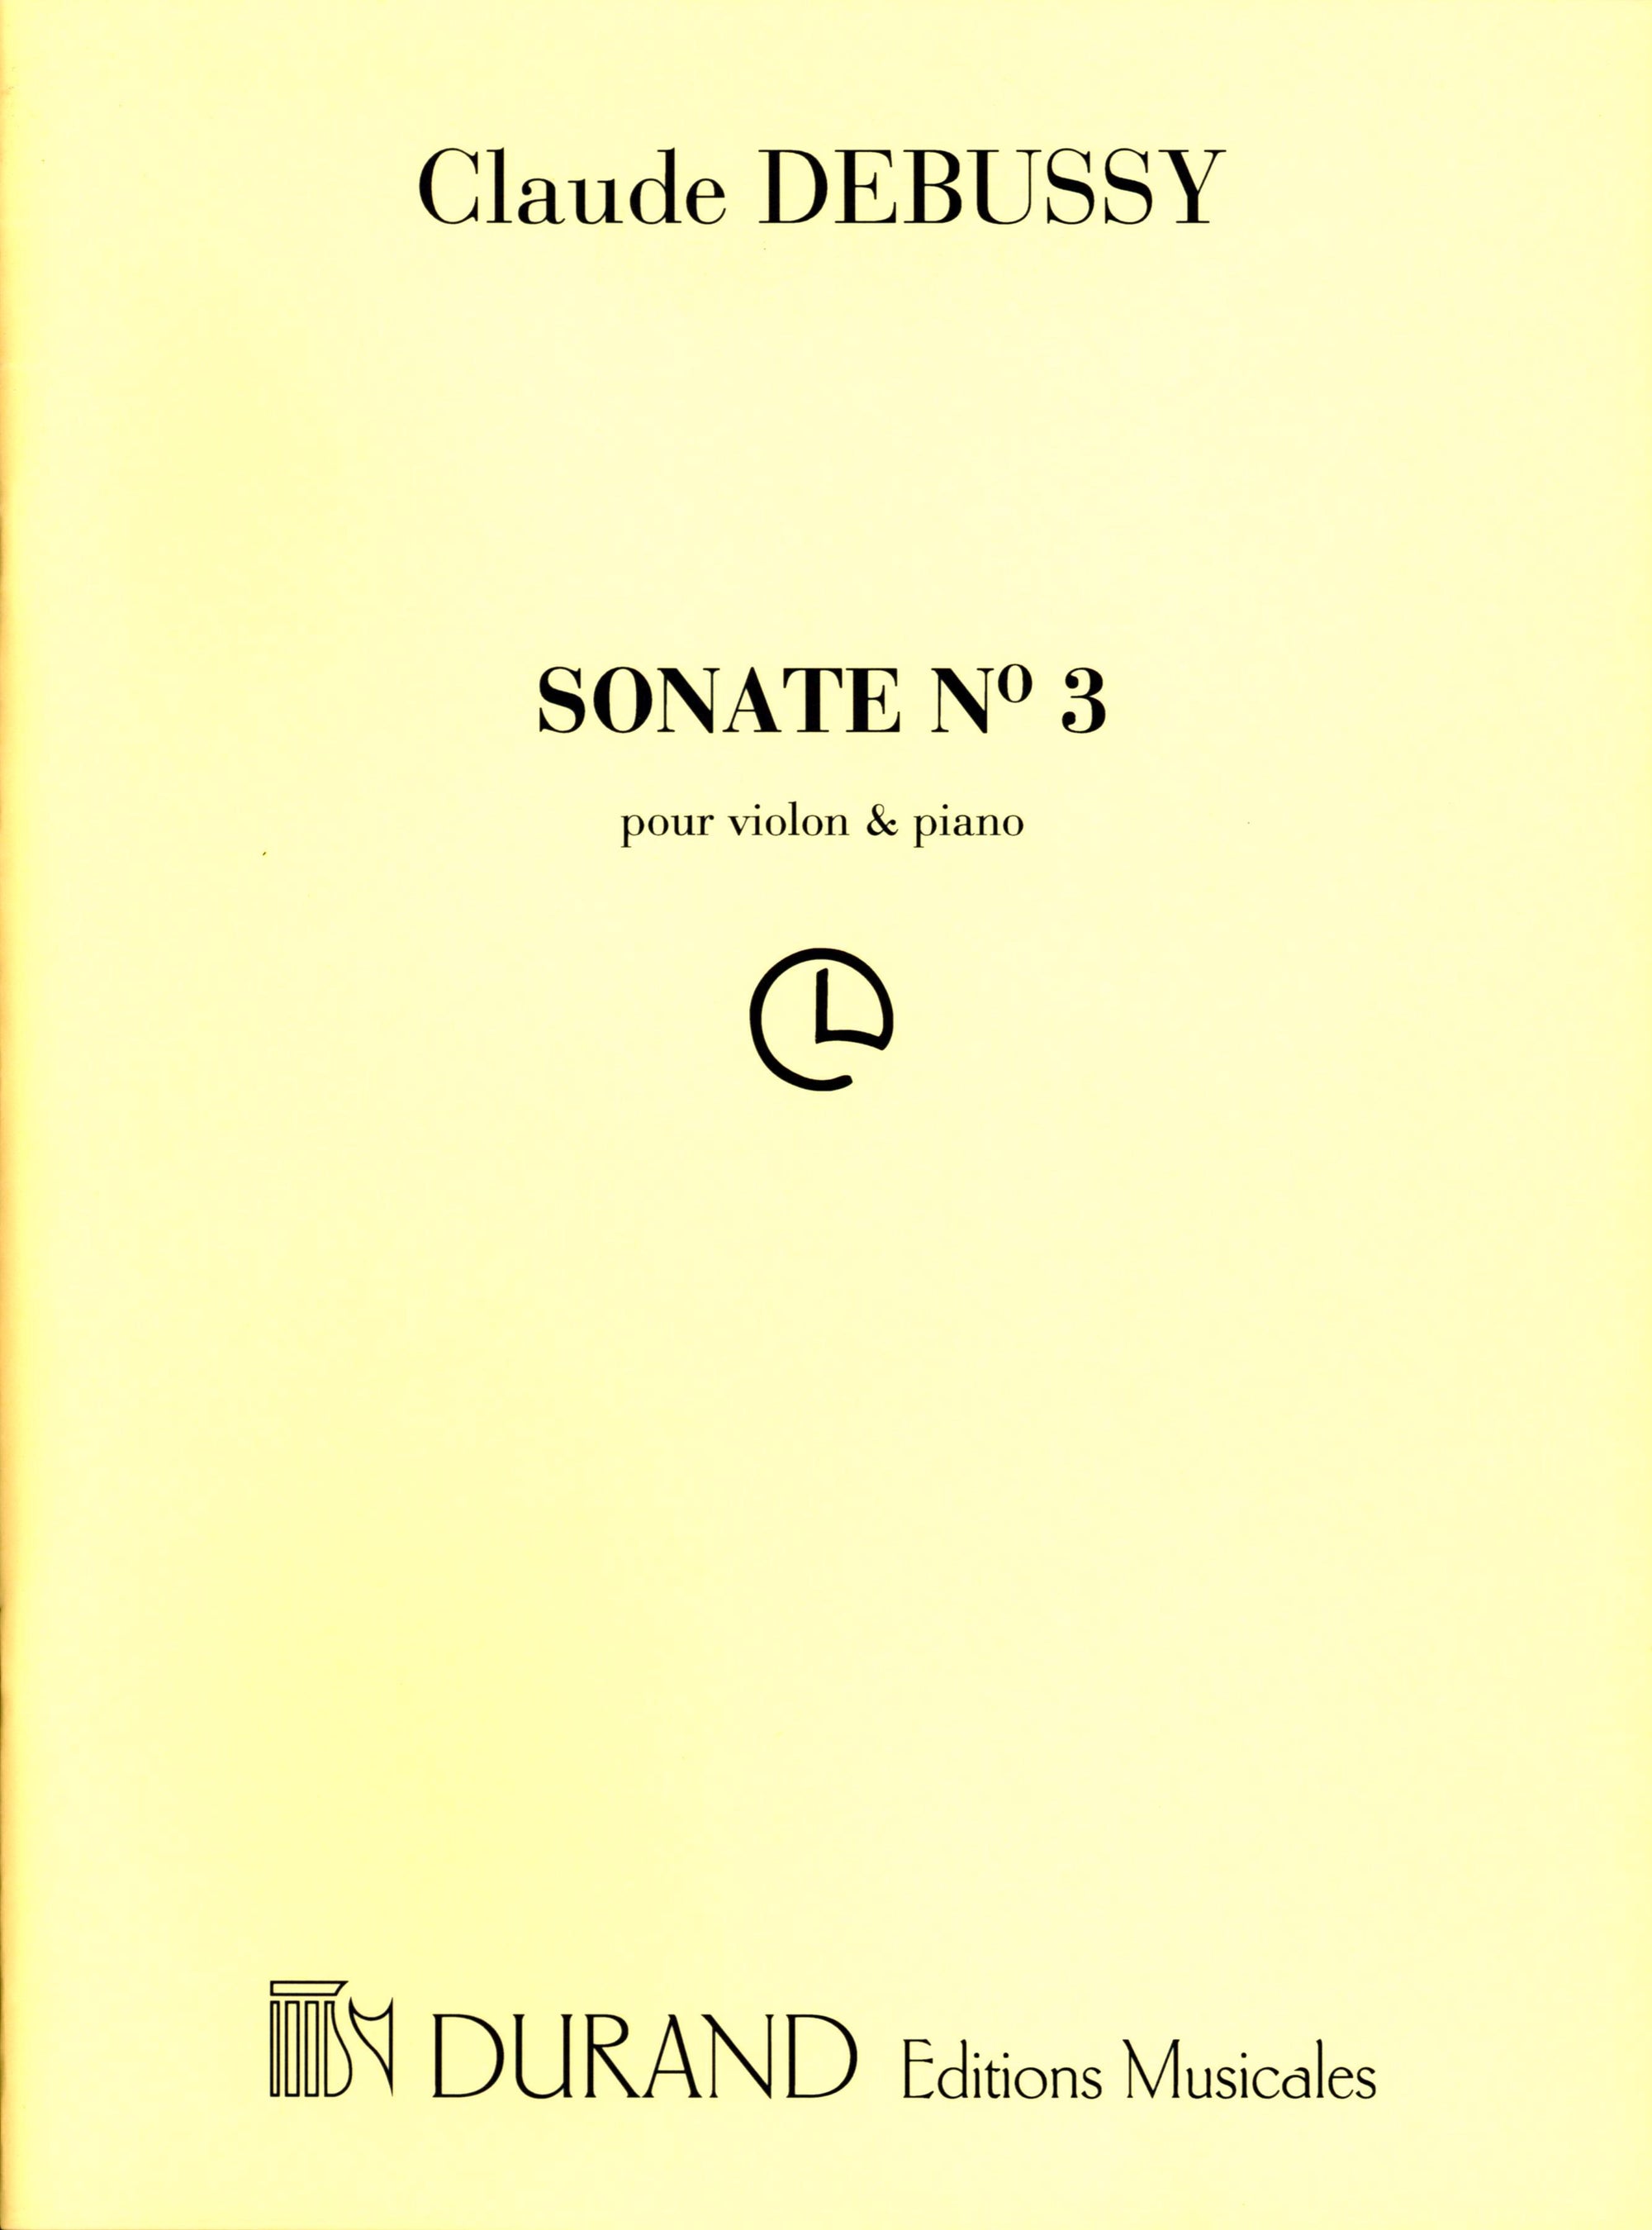 Debussy: Violin Sonata in G Minor